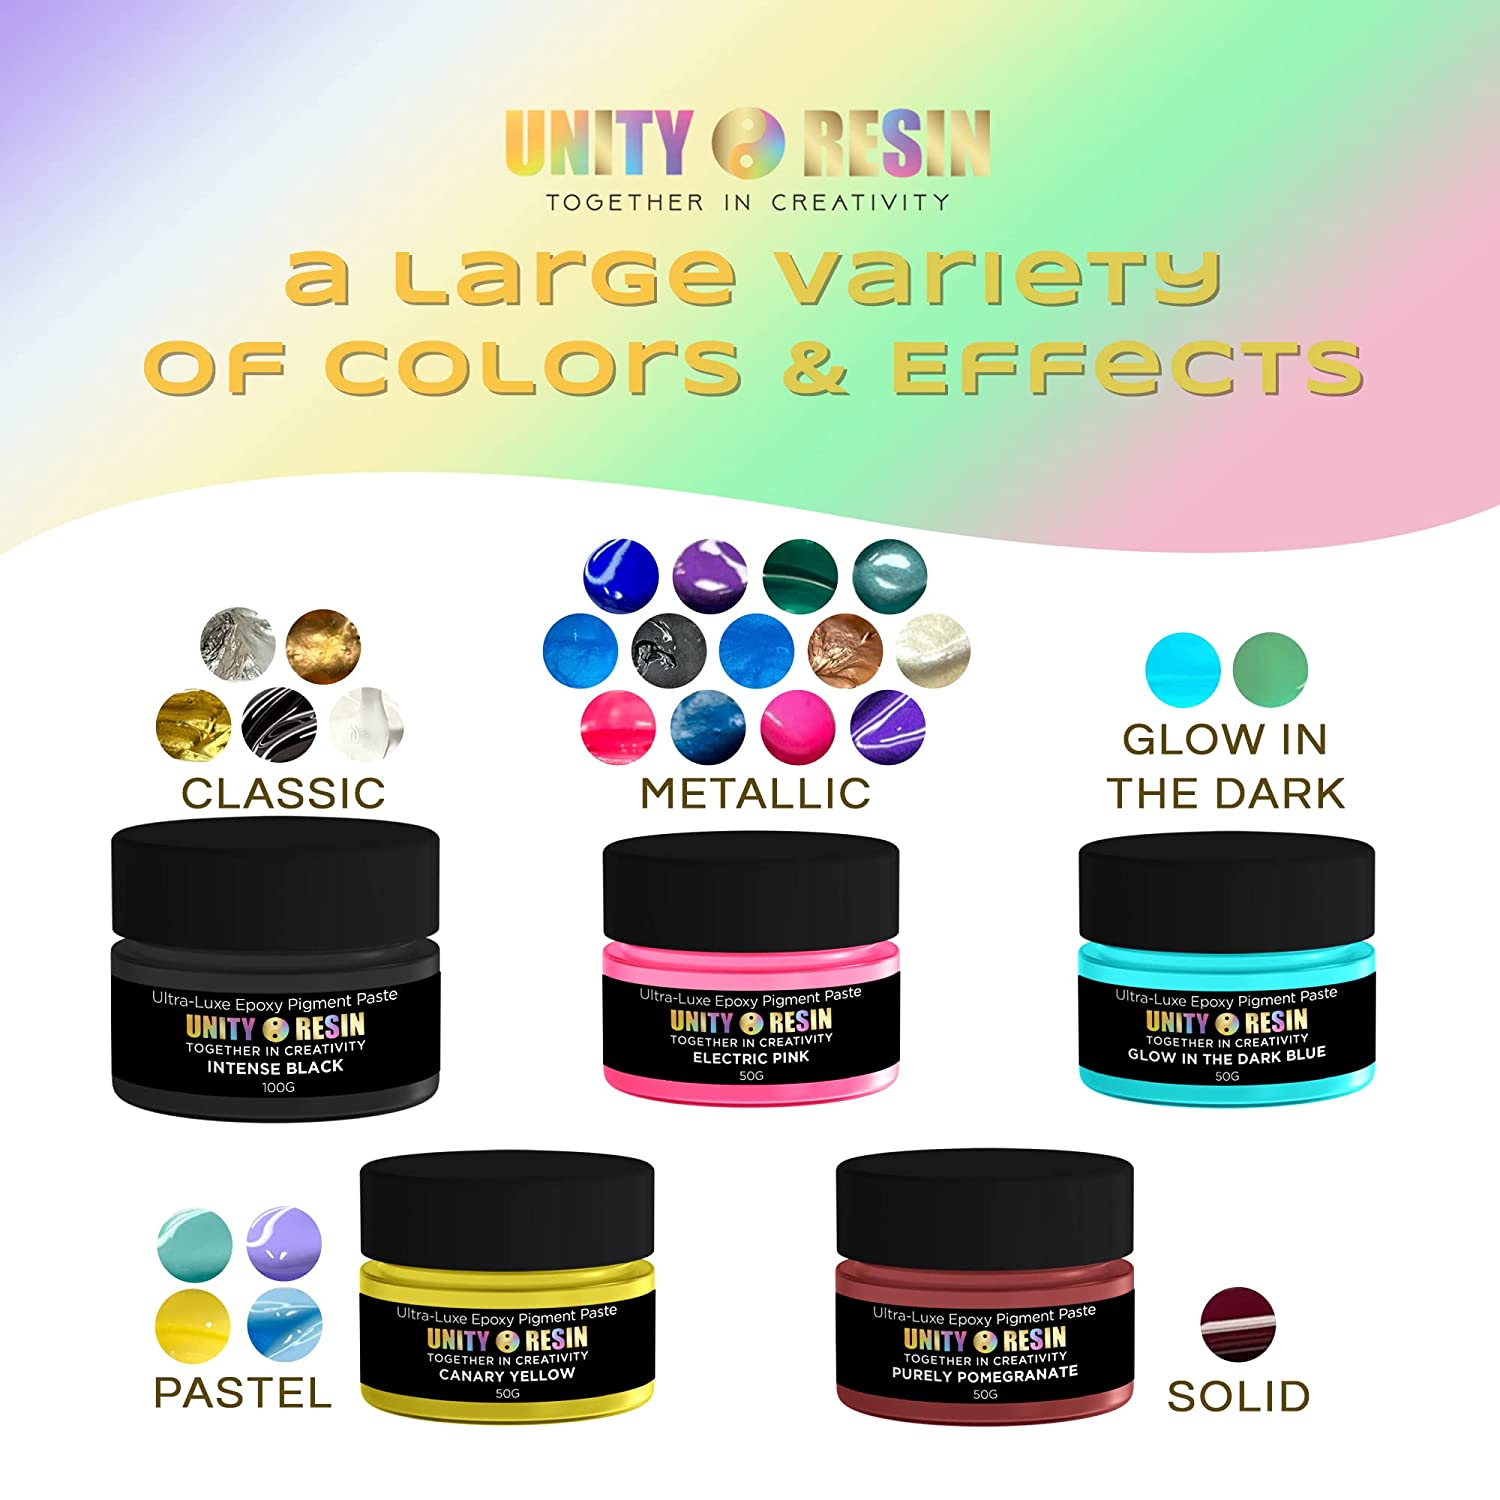 Ultra-Luxe Epoxy Resin Pigment Paste- MAJESTIC MAGENTA (50G)